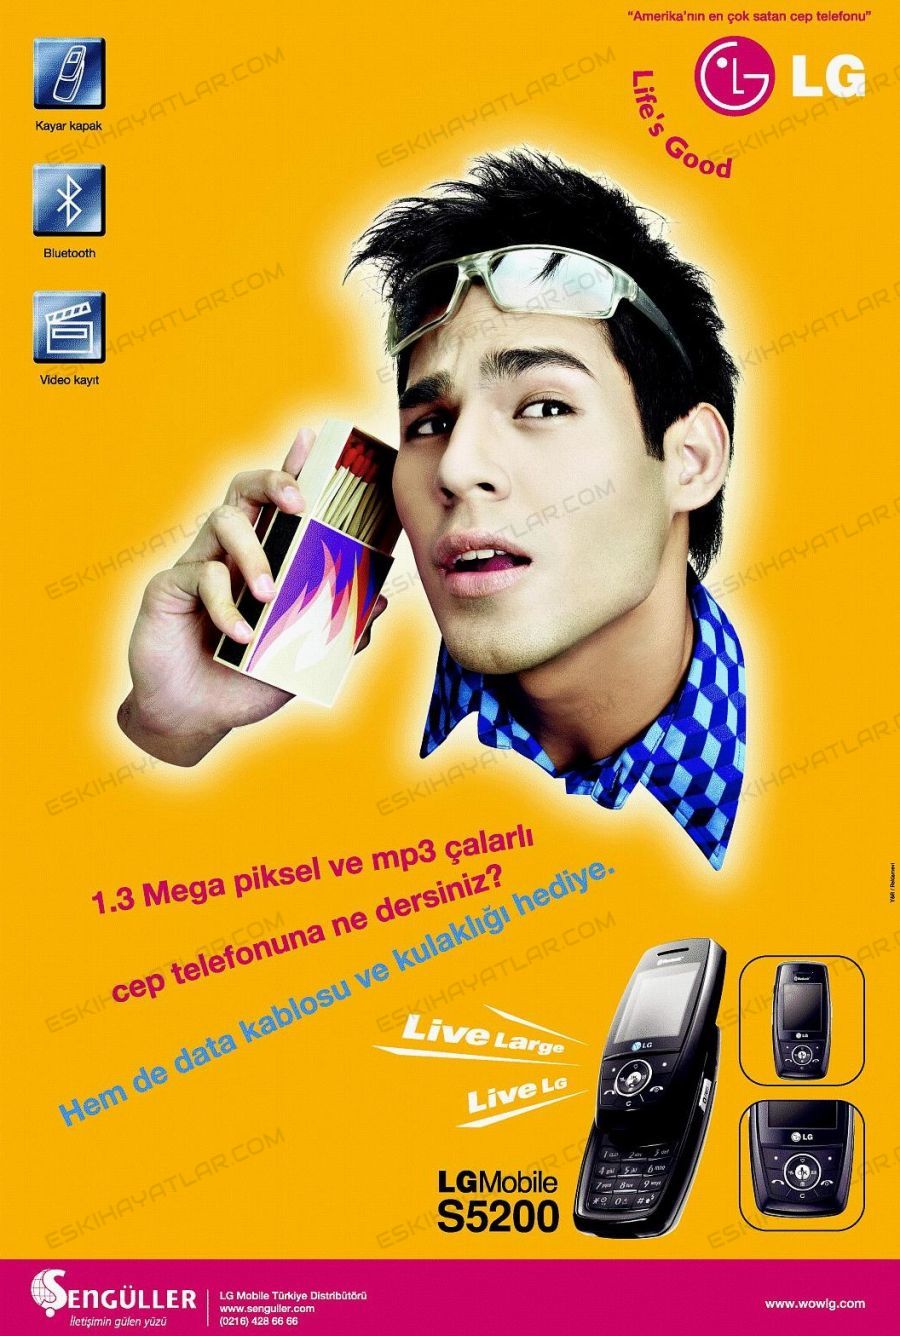 0347-lg-s5200-telefon-reklami-2006-yilinda-cep-telefonlari-kayar-kapakli-telefonlar-1-3-megapiksel-kamerali-telefon